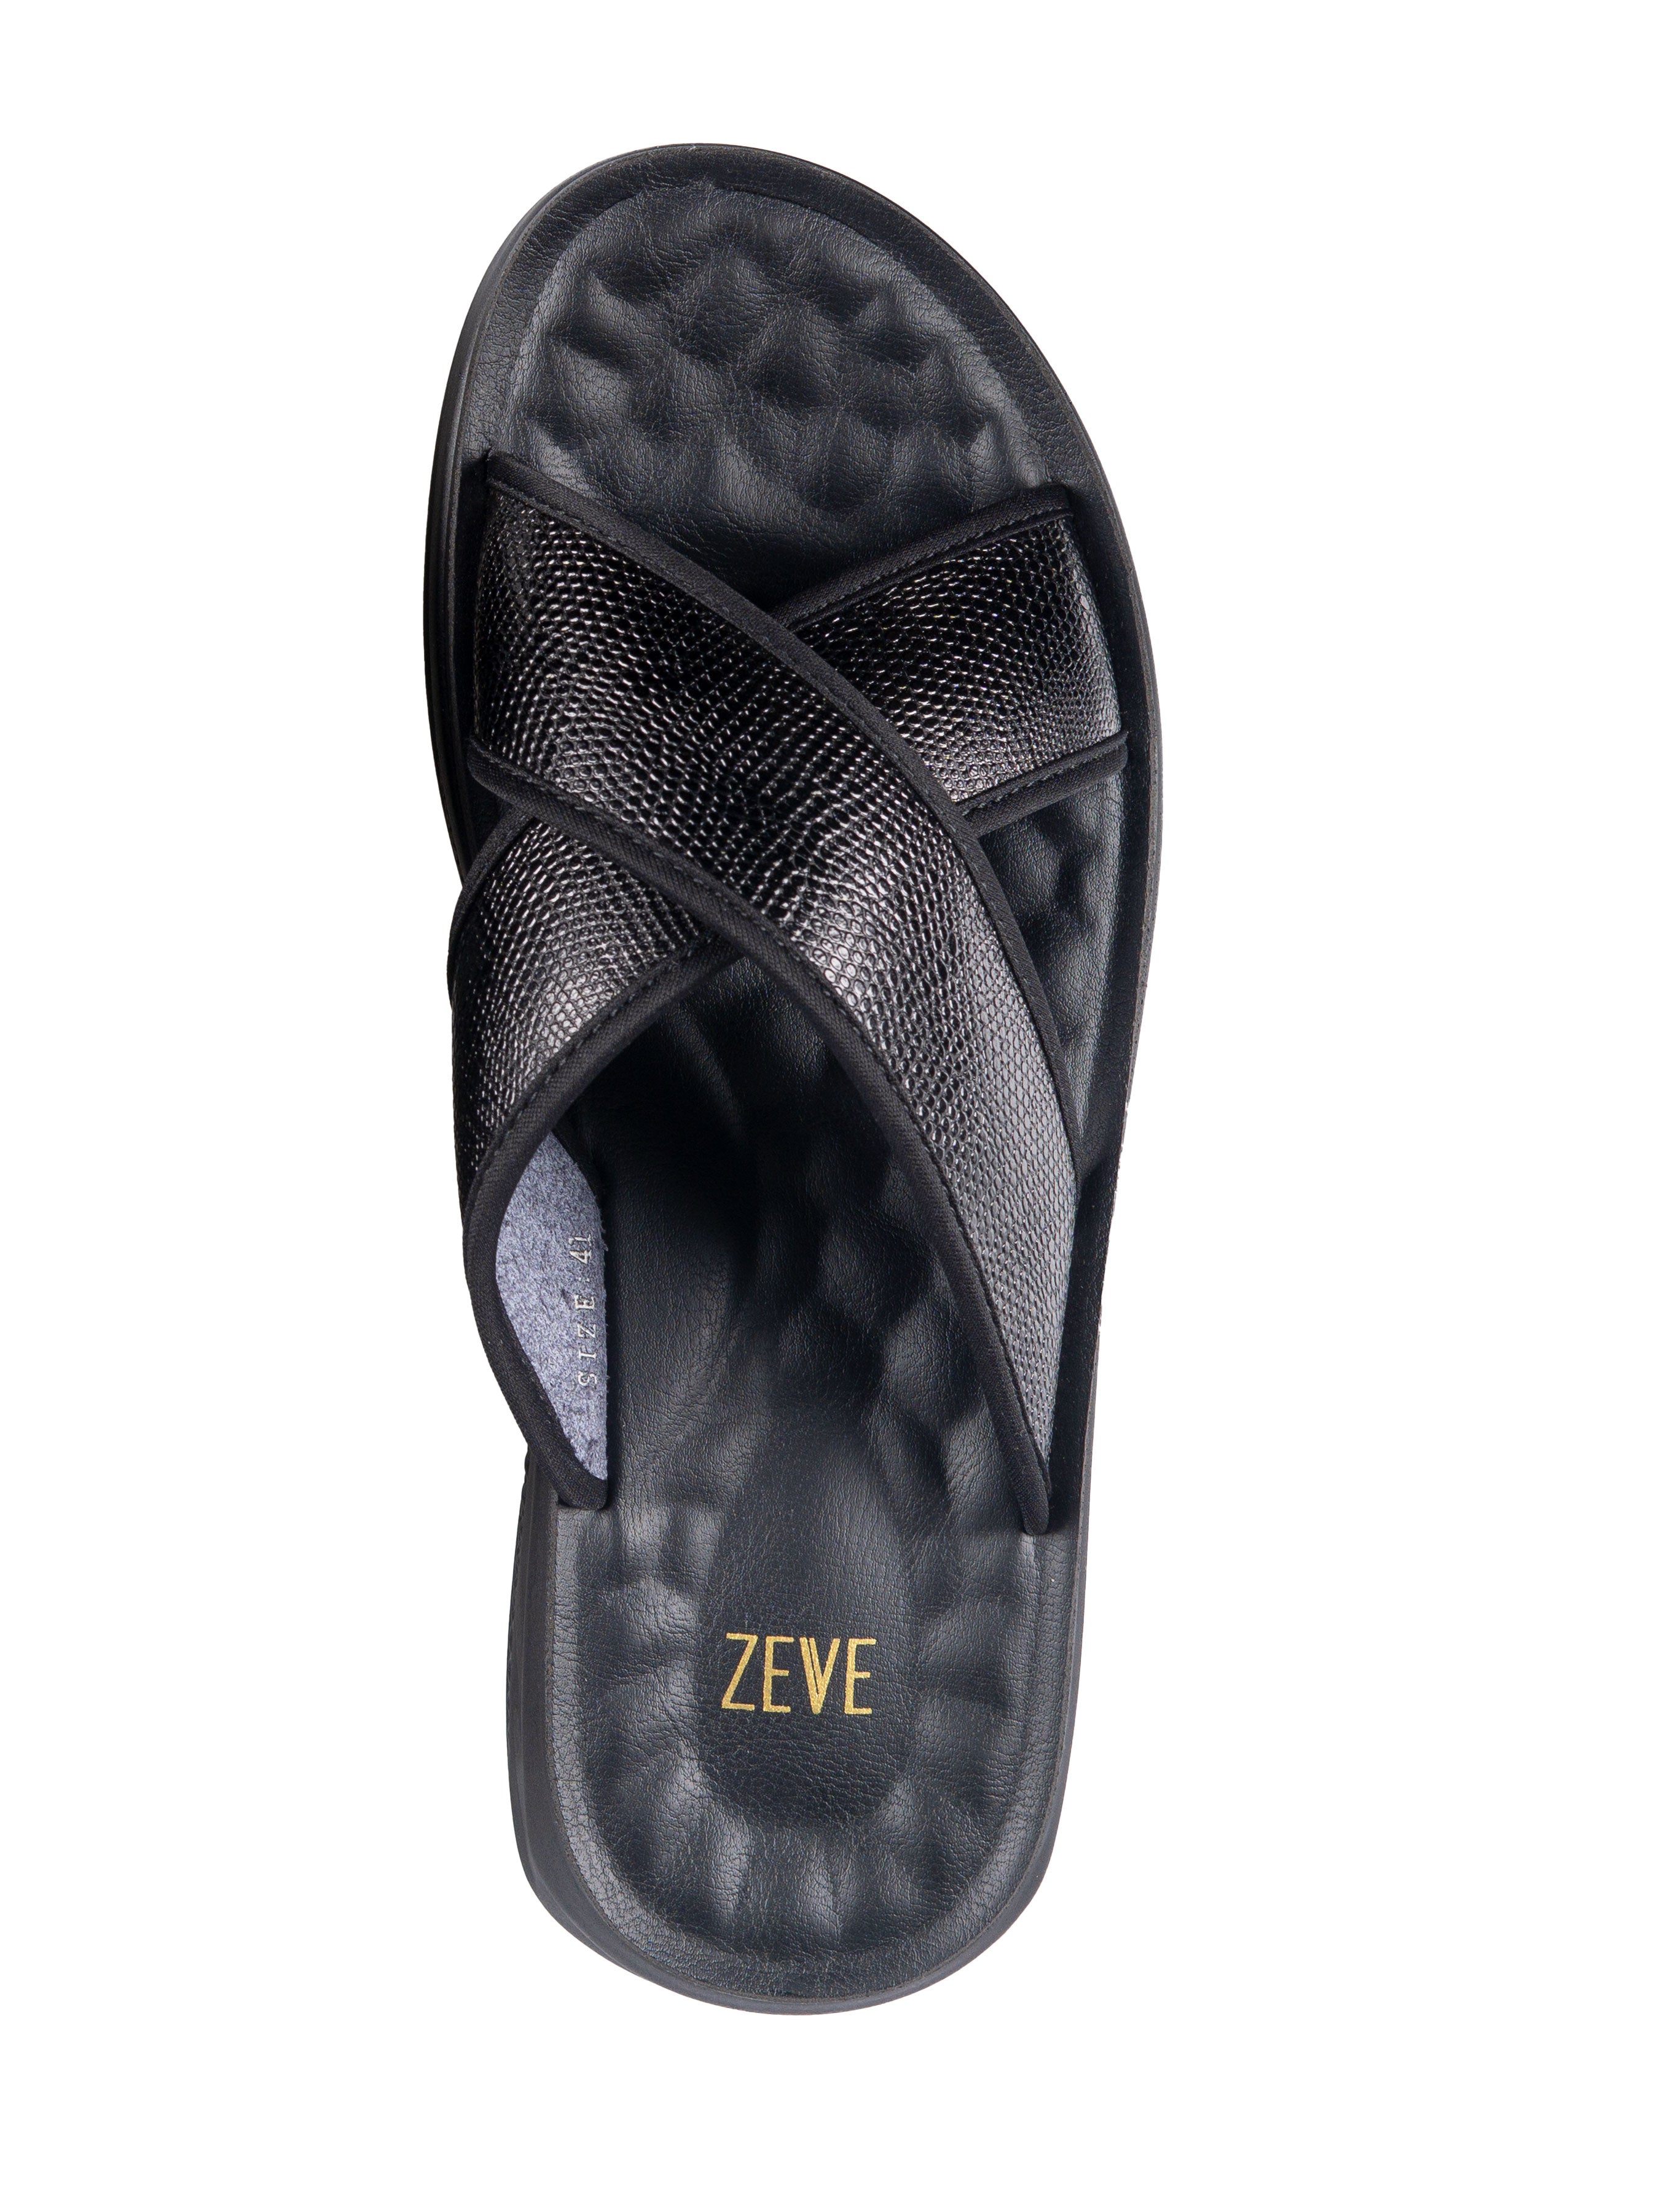 Cross Strap Sandal - Black Phyton Leather - Zeve Shoes